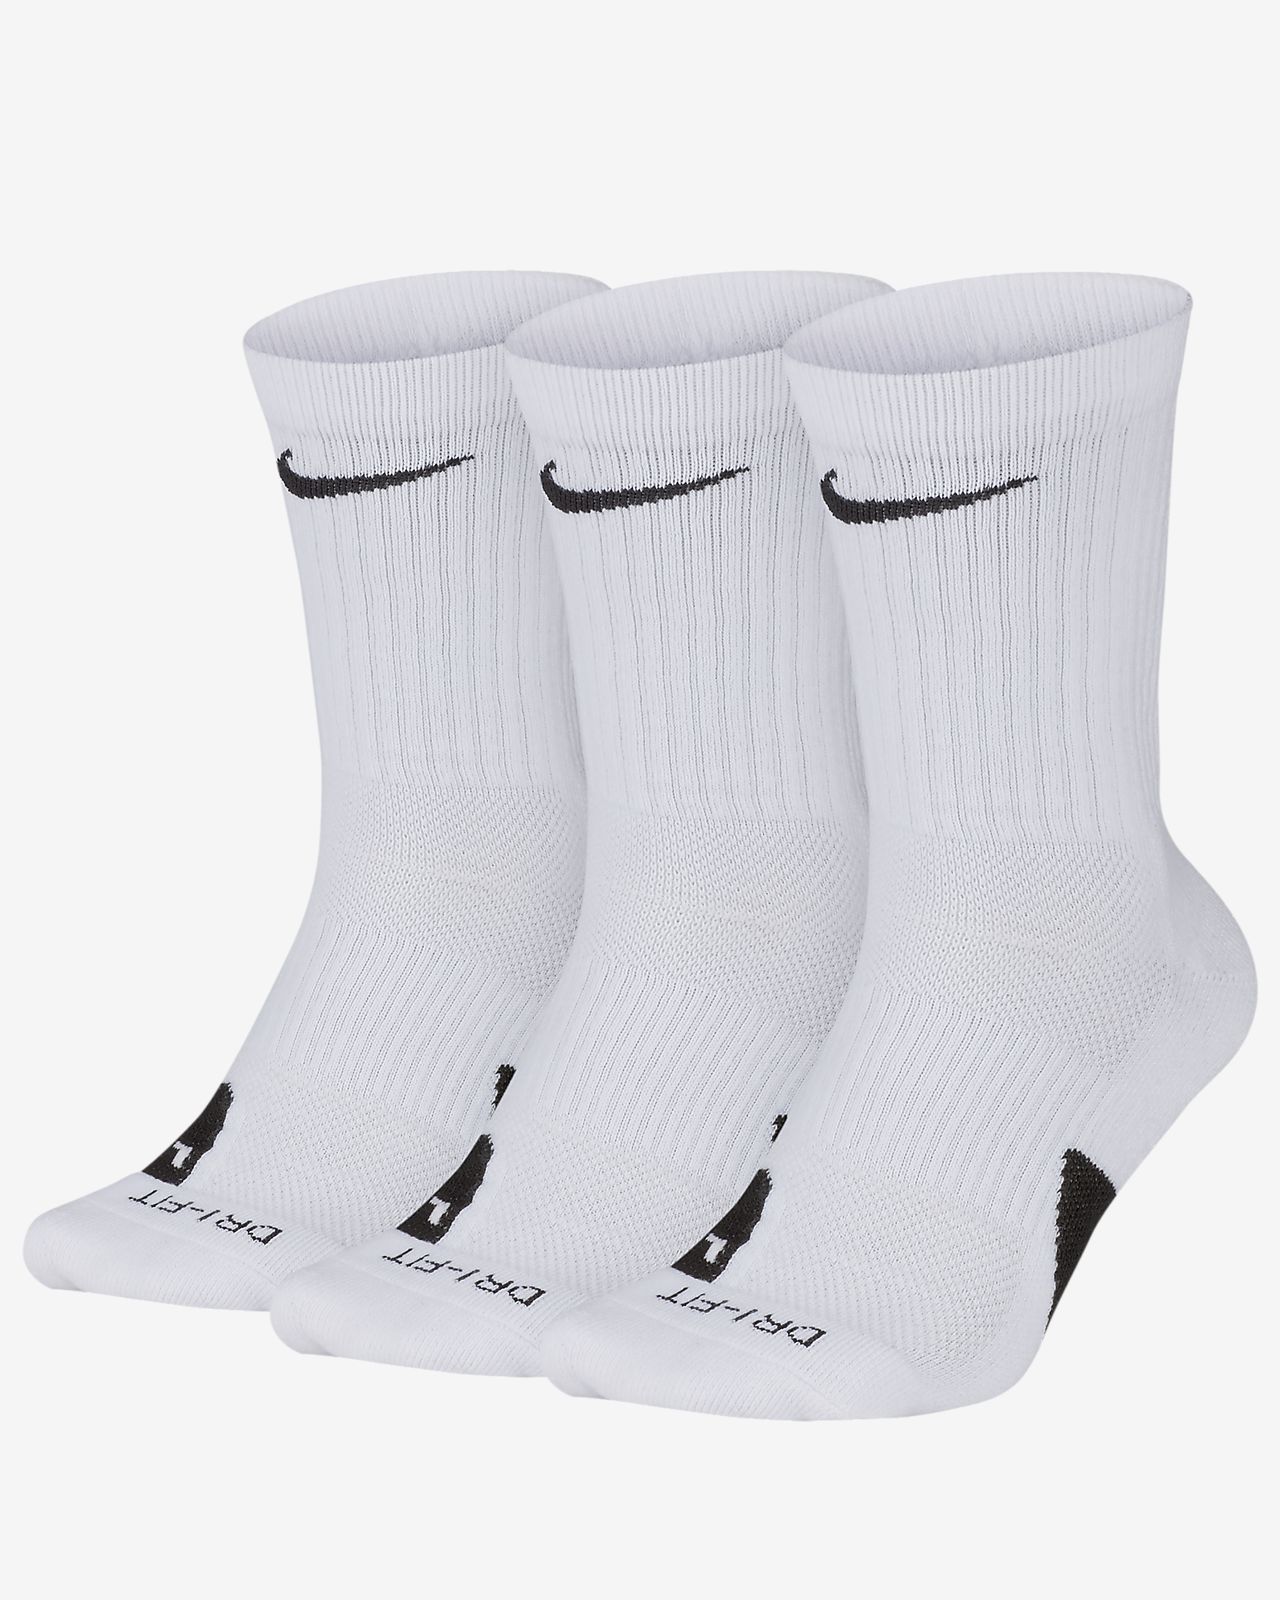 nike presto all white with nike elite socks